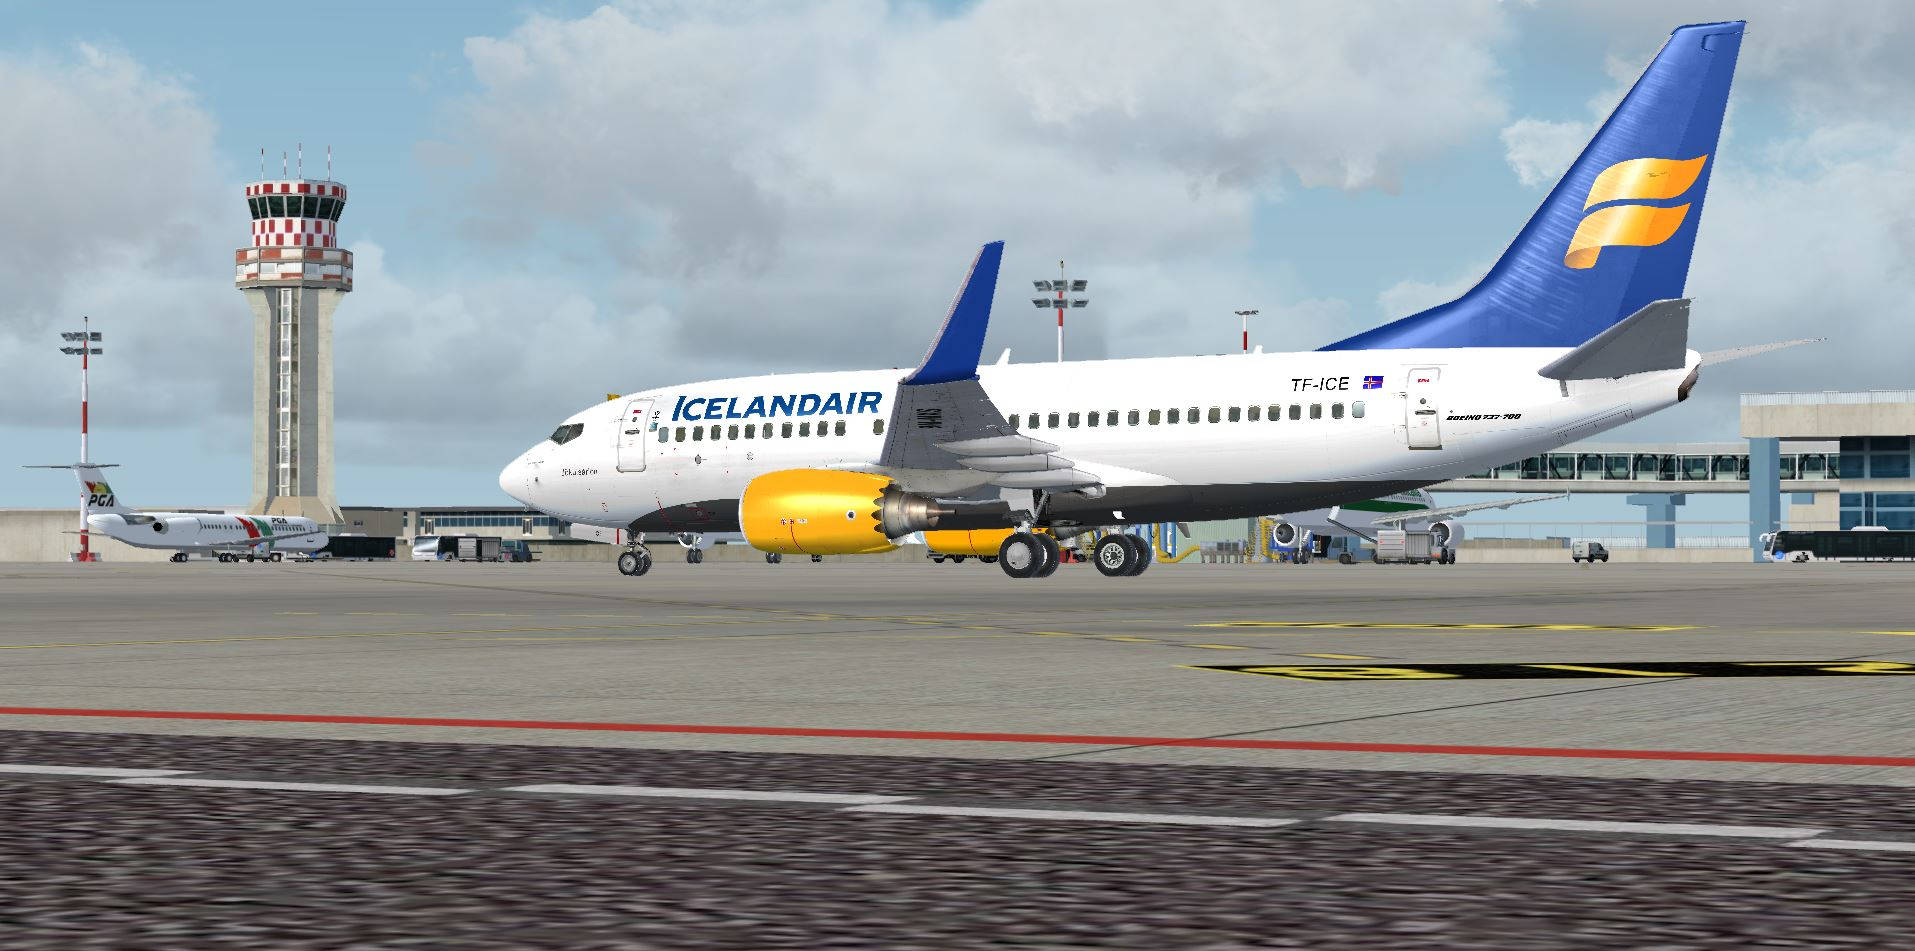 Arrivodell'aereo Di Icelandair Aviation Sfondo